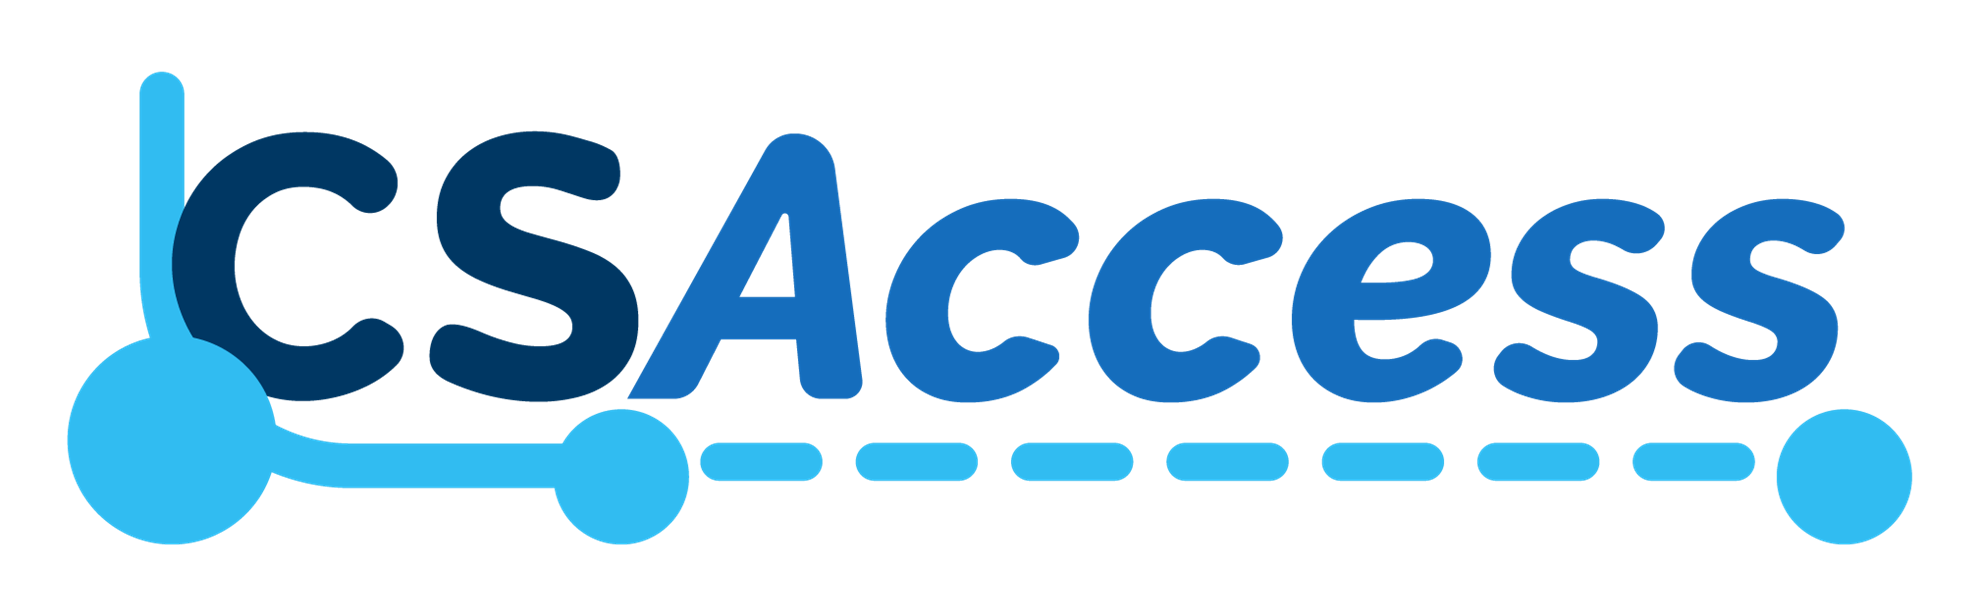 CS Access Logo 